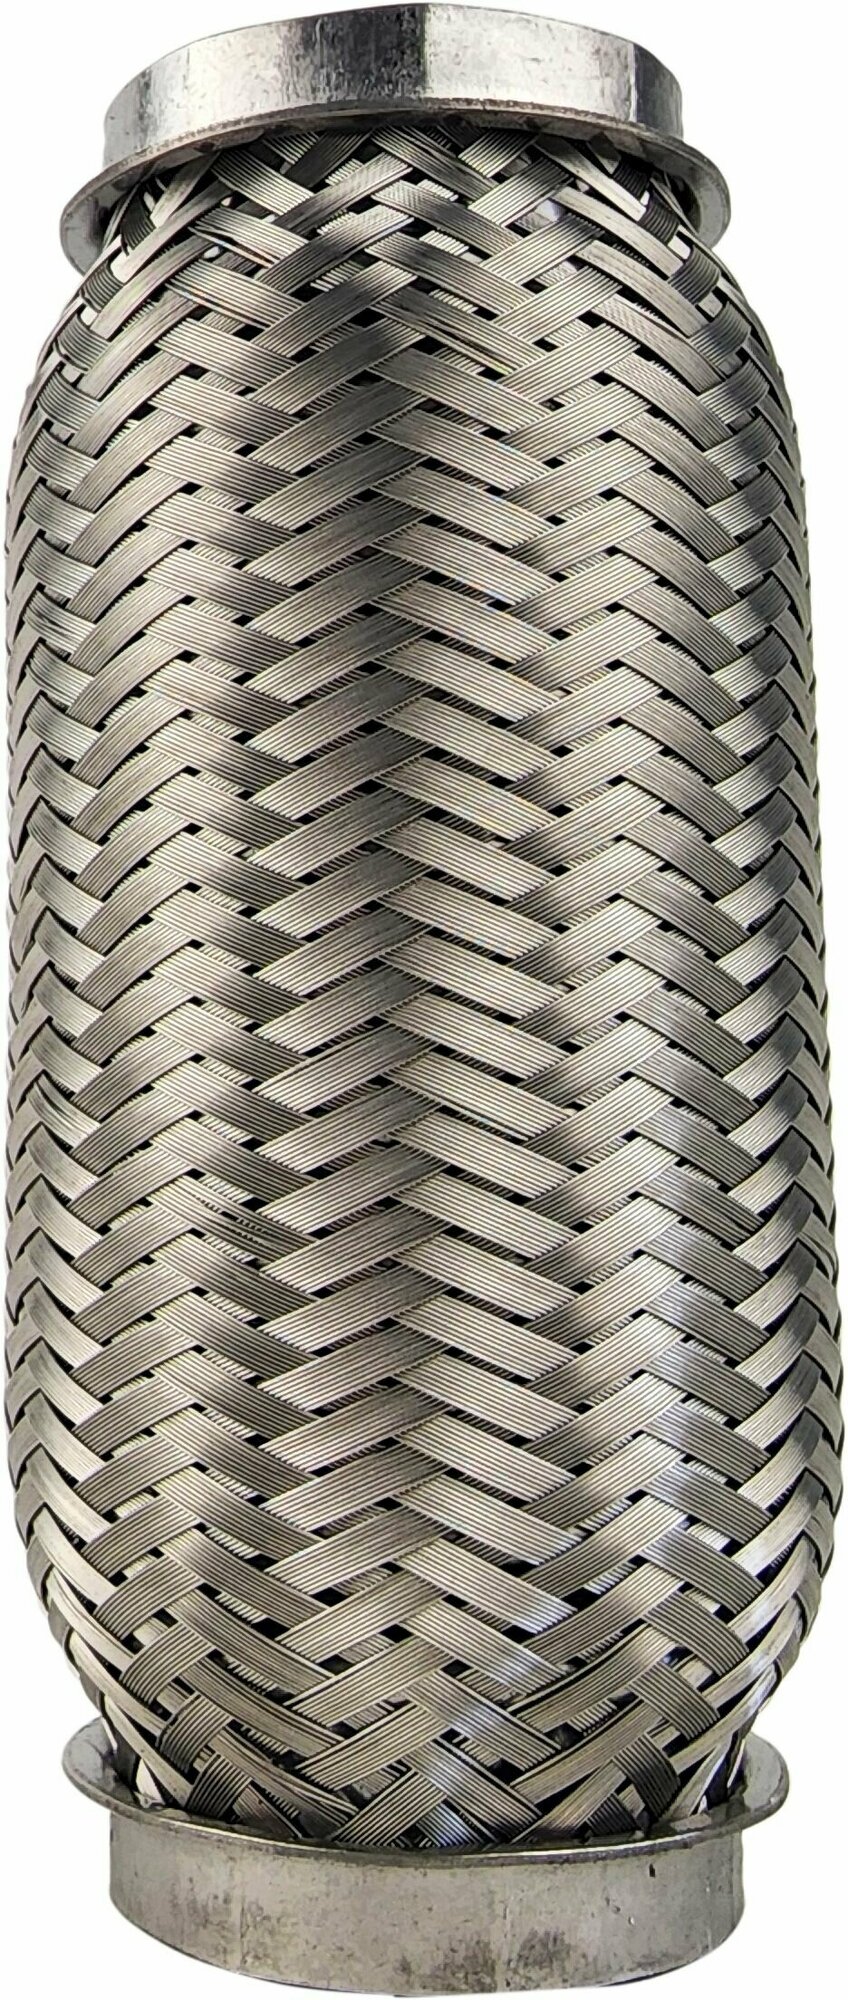 Гофра глушителя Lada 2114 2110 Kalina Granta Priora (диаметр трубы 45 мм.) intrelock (45x150)